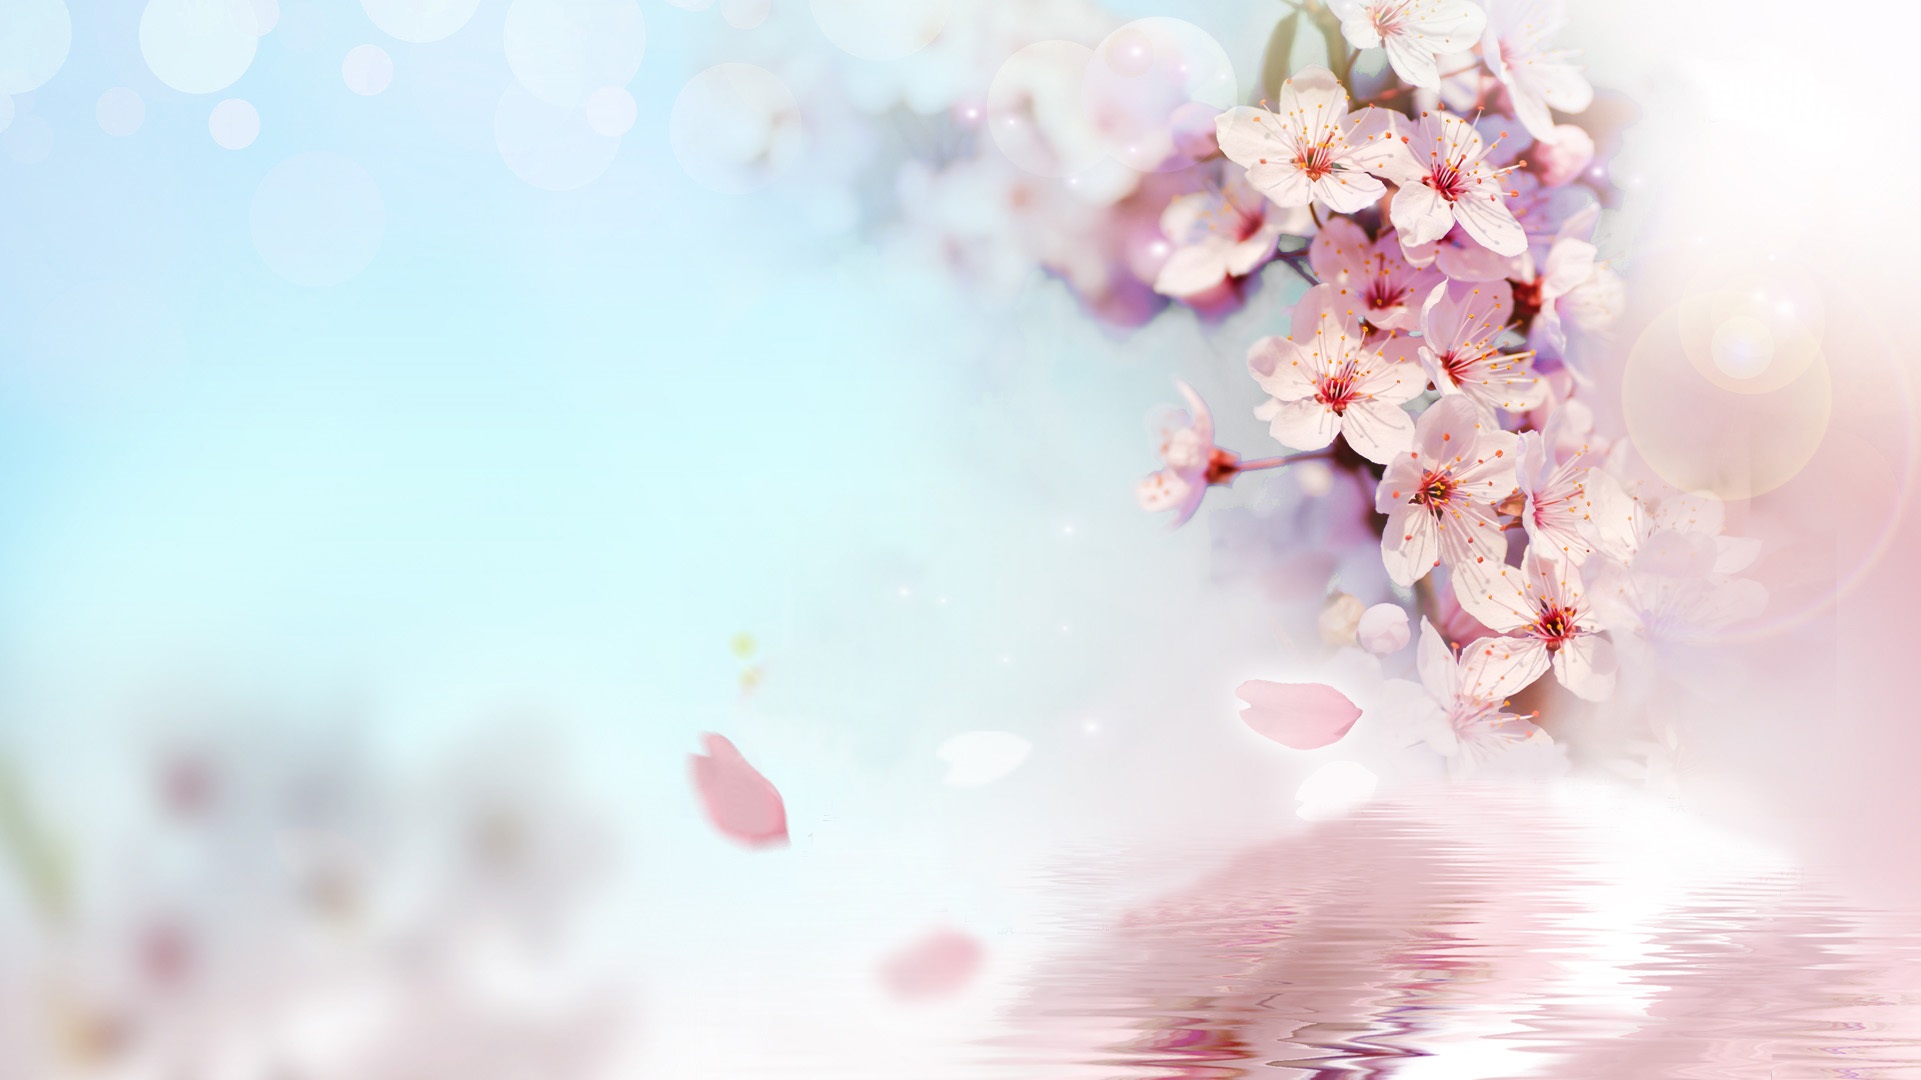 flor fondos de pantalla hd descargar gratis,florecer,rosado,flor,flor de cerezo,primavera